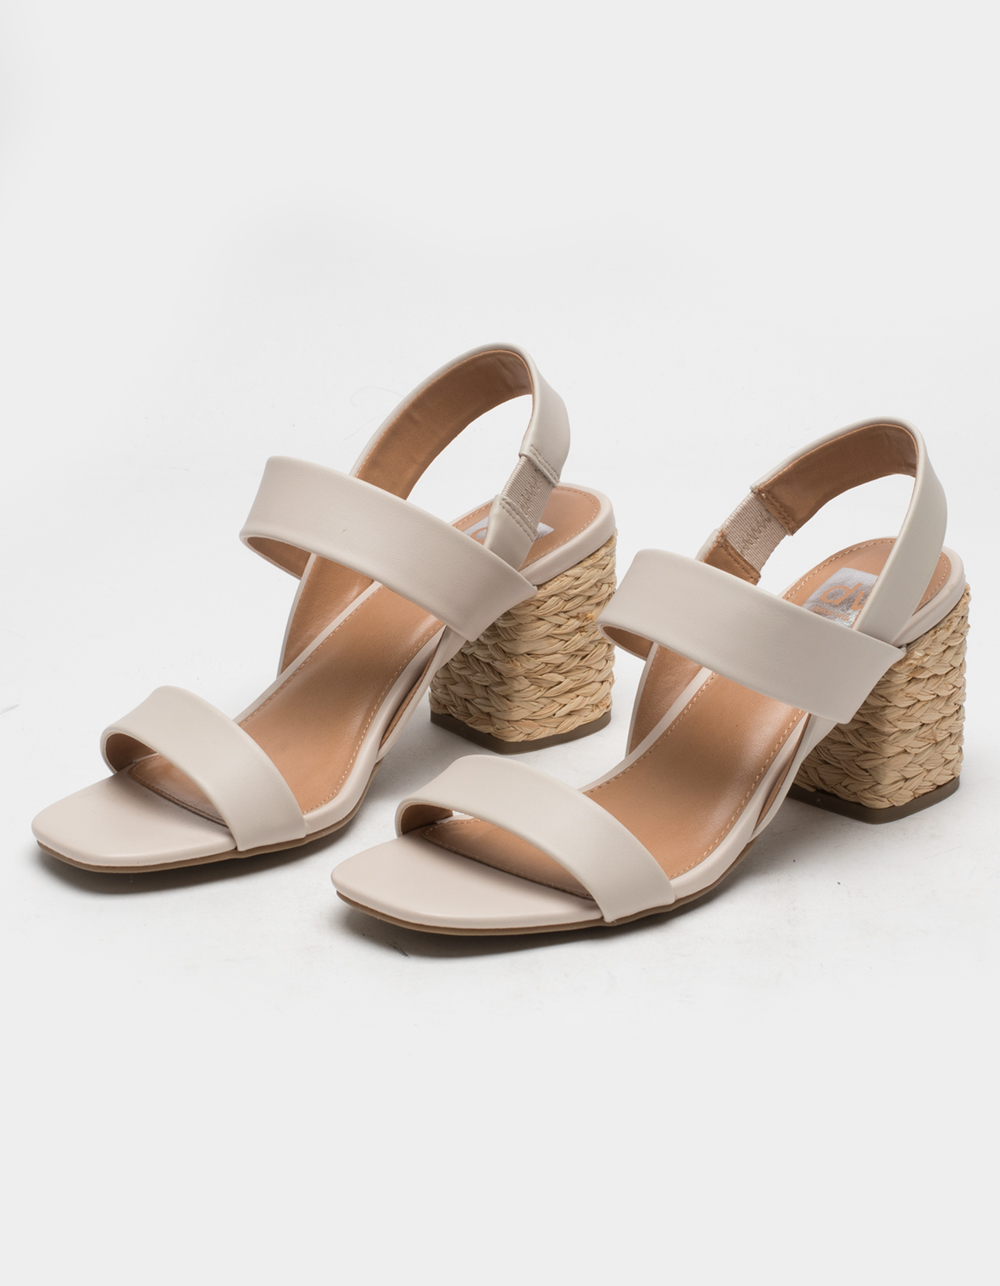 DOLCE VITA Trellis Womens Cream Sandals - CREAM | Tillys